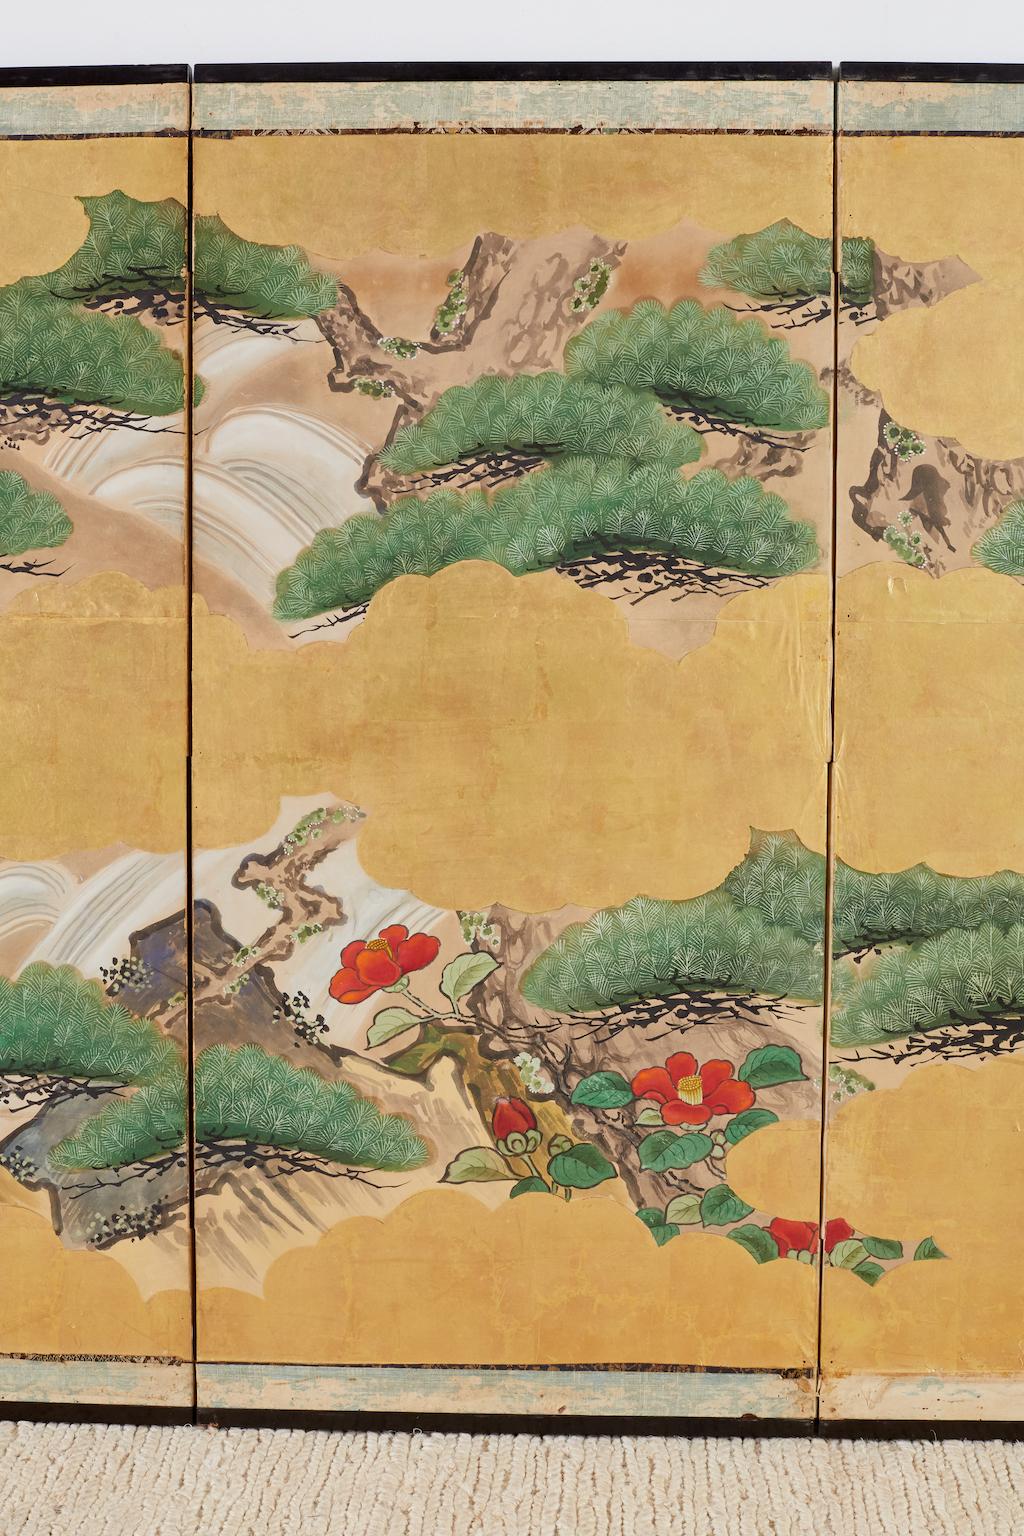 Paper Japanese Six-Panel Kano School Crane Landscape Screen